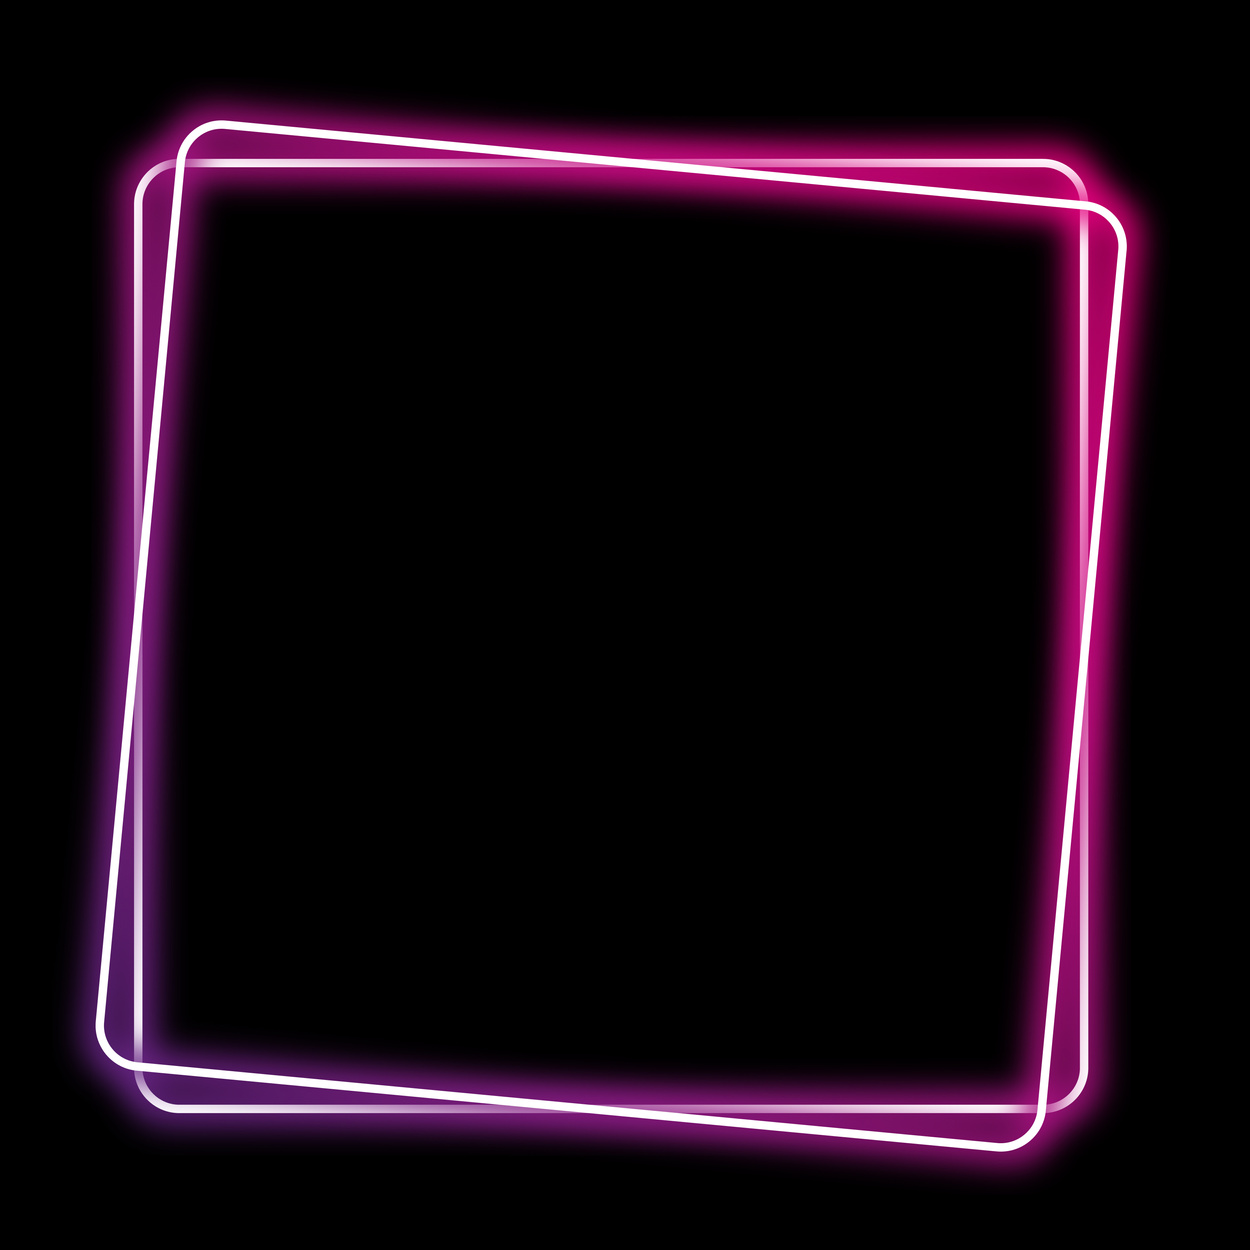 Neon pink frame on black background